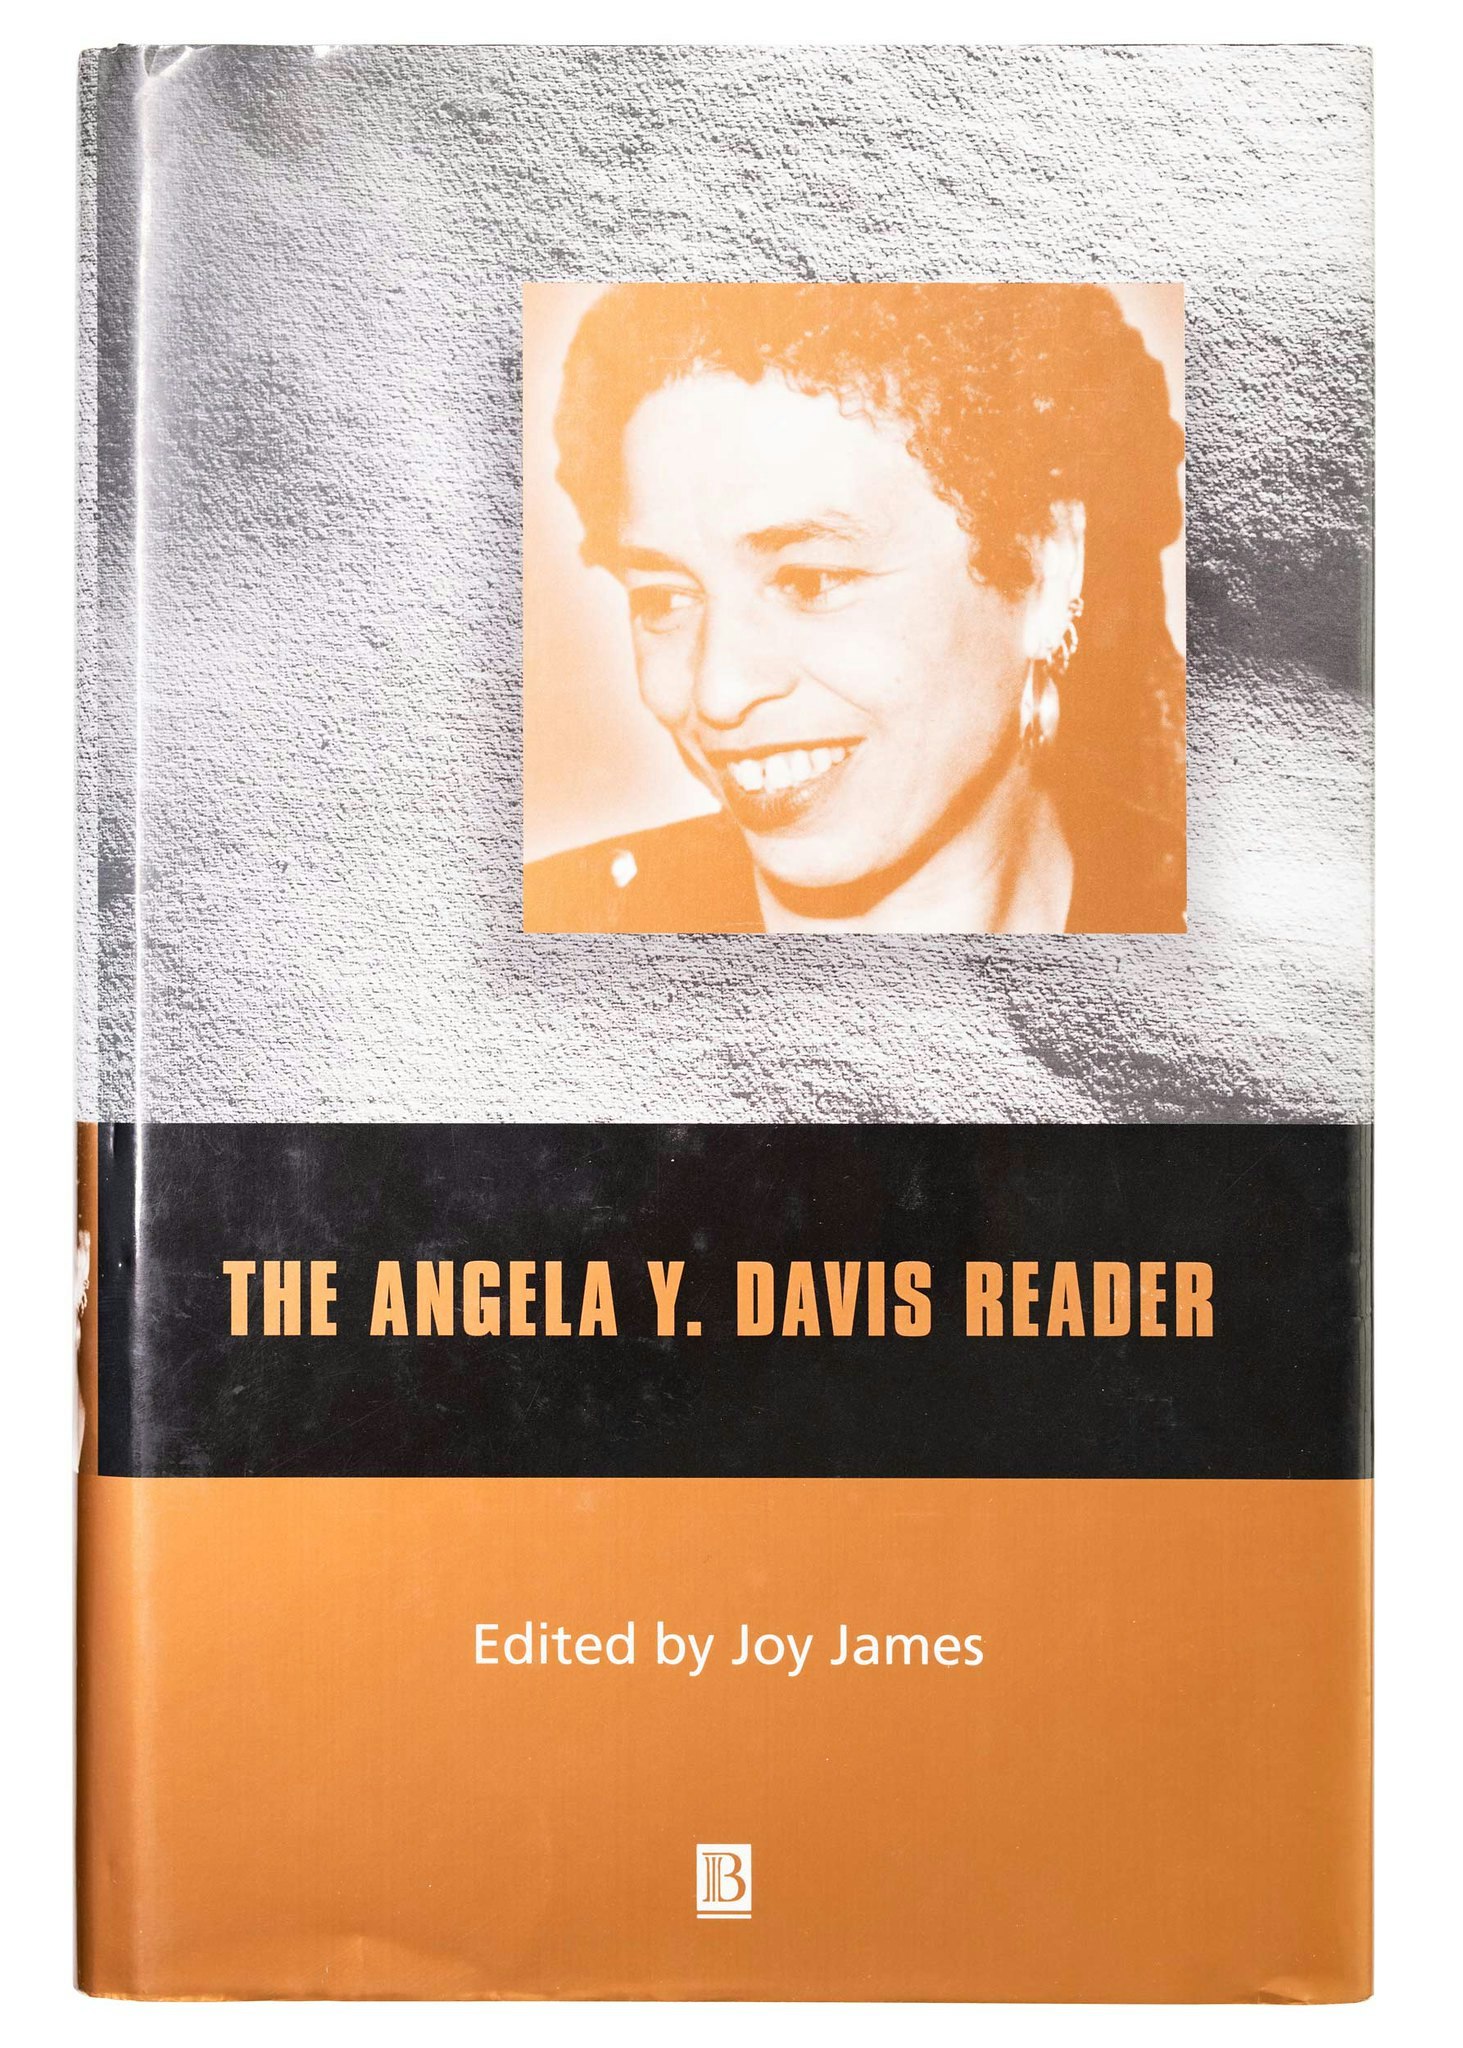 Angela Y. Davis Book cover with headshot of Davis tinted orange